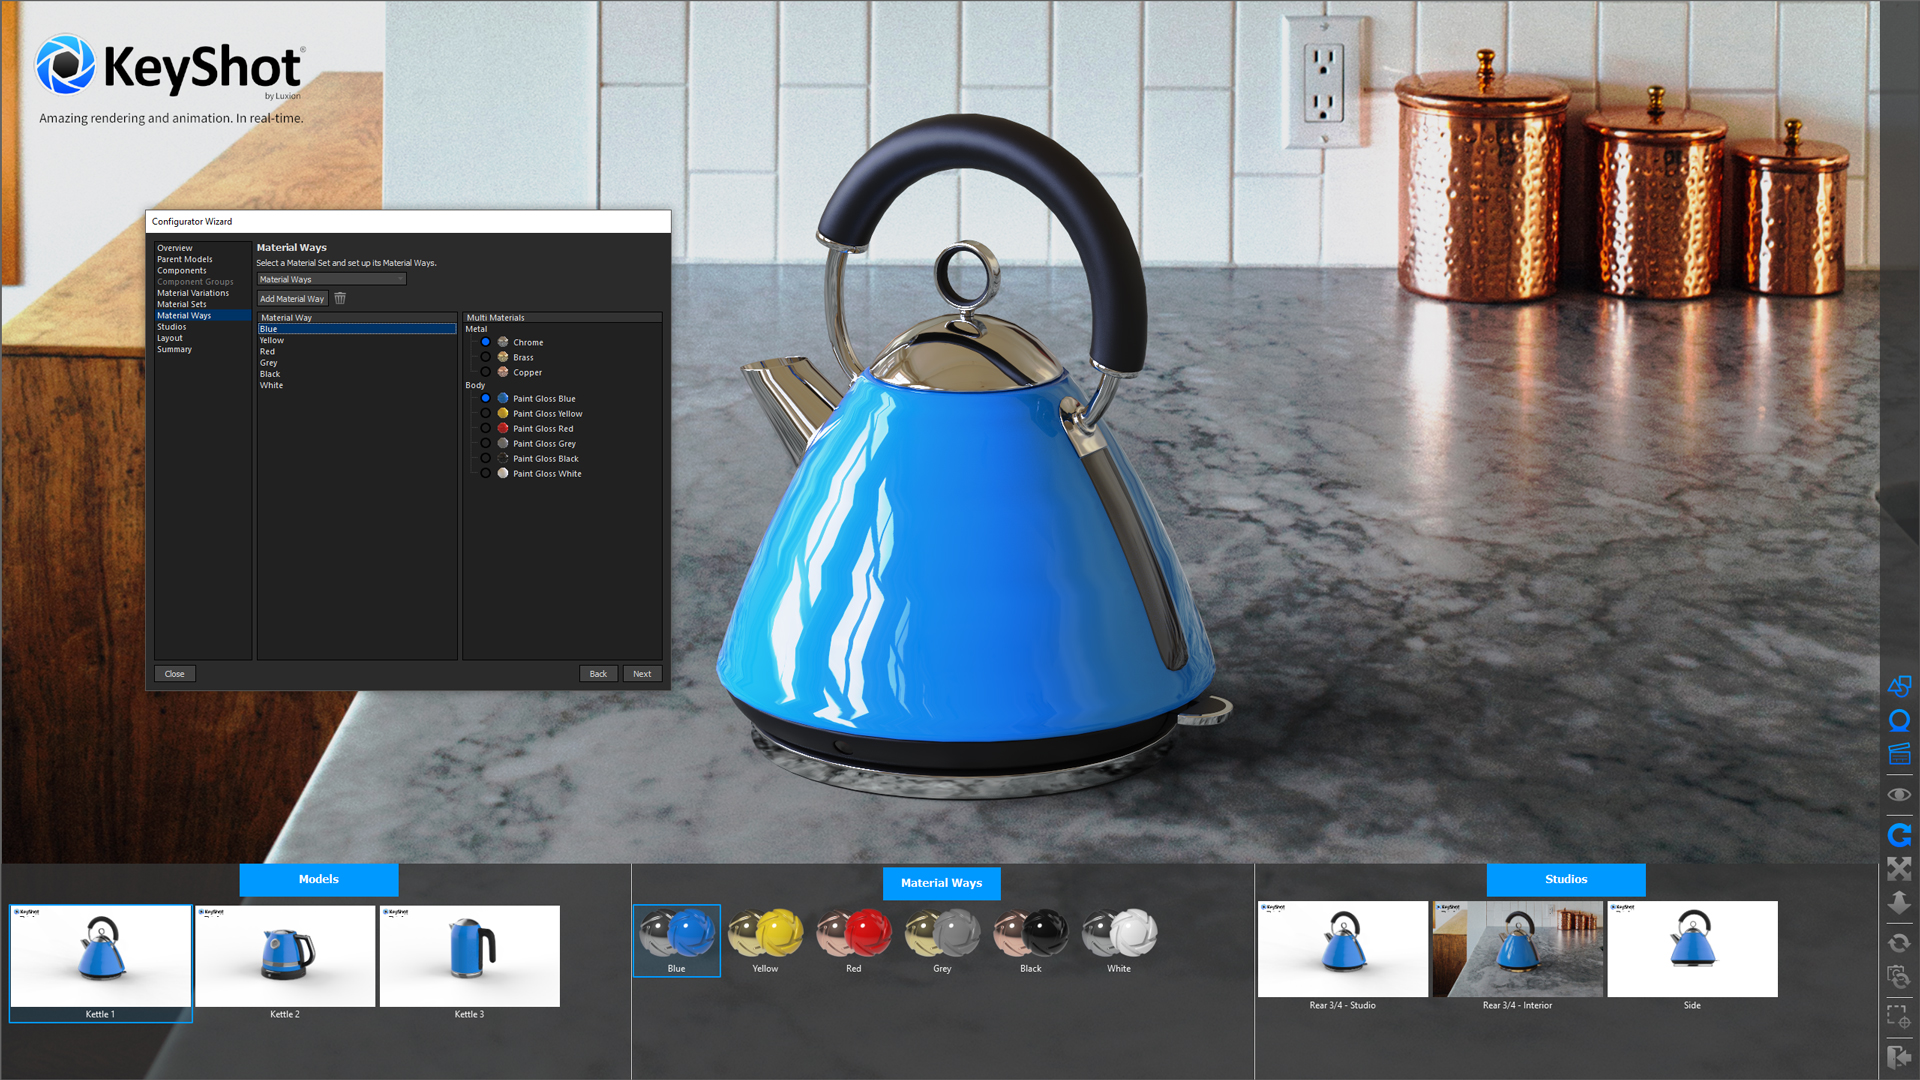 Luxion Keyshot Pro 2023 v12.1.1.11 download the new version for windows